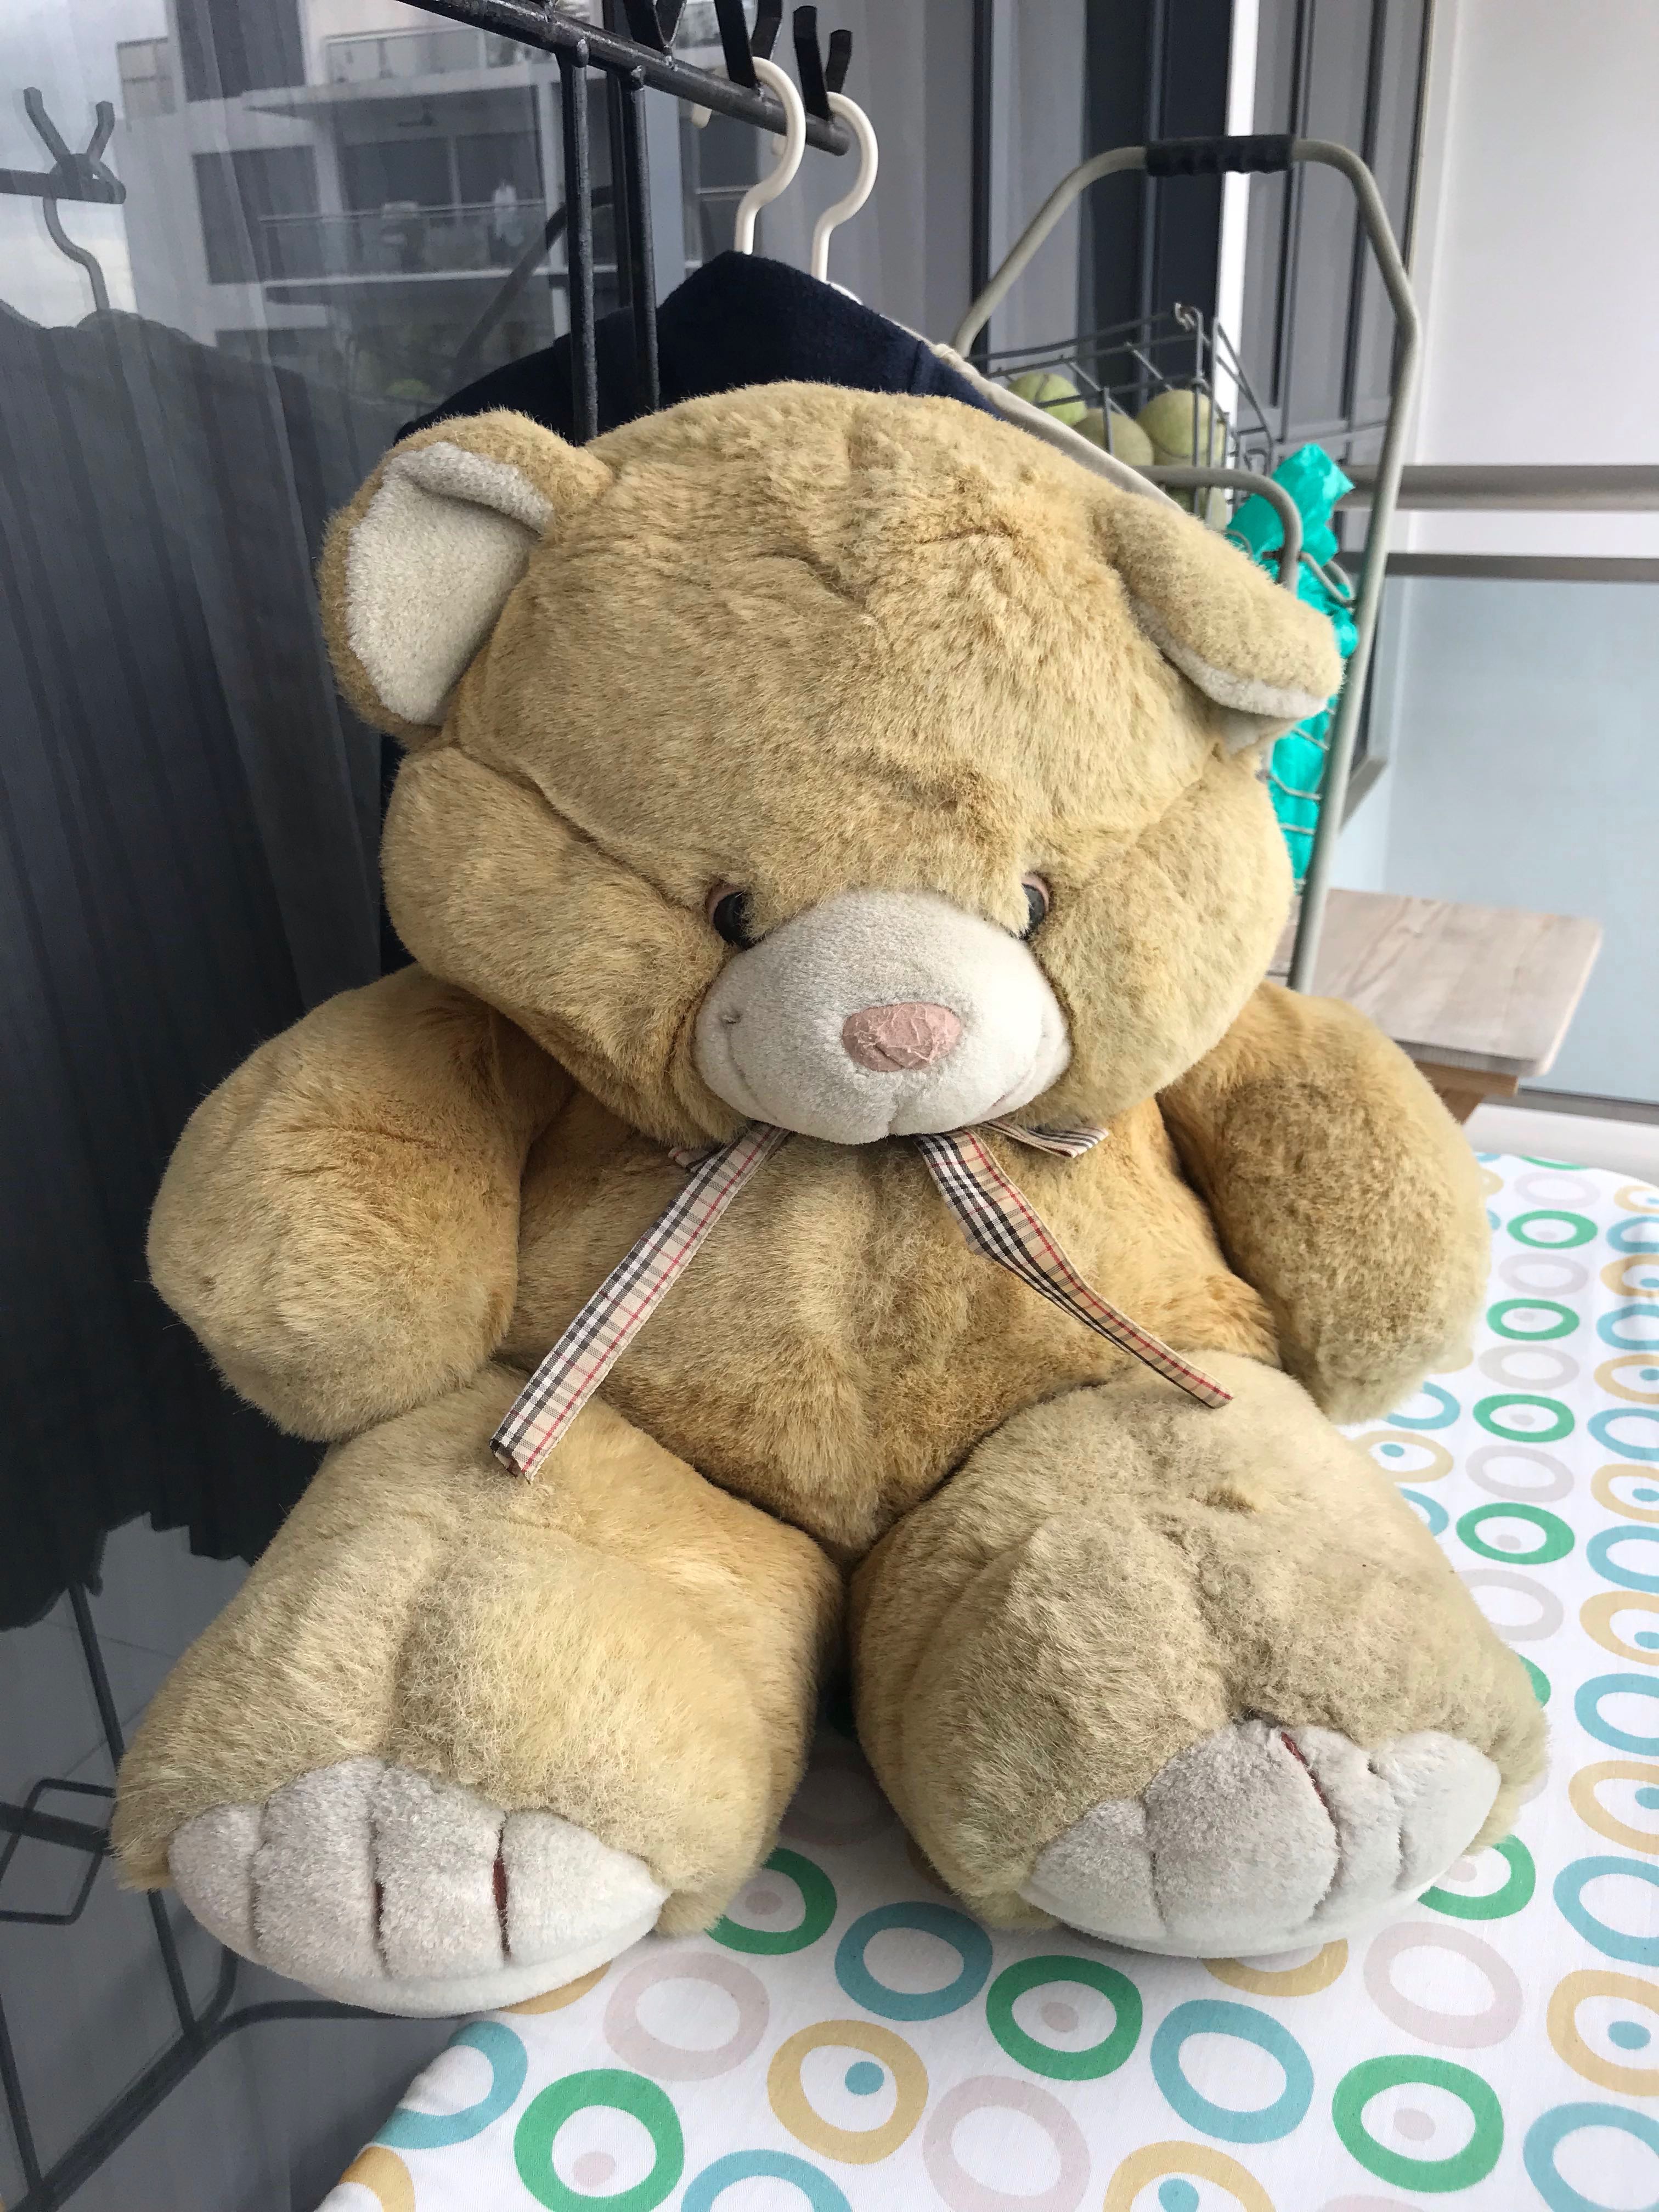 Gigantic teddy bear, Hobbies & Toys, Toys & Games on Carousell